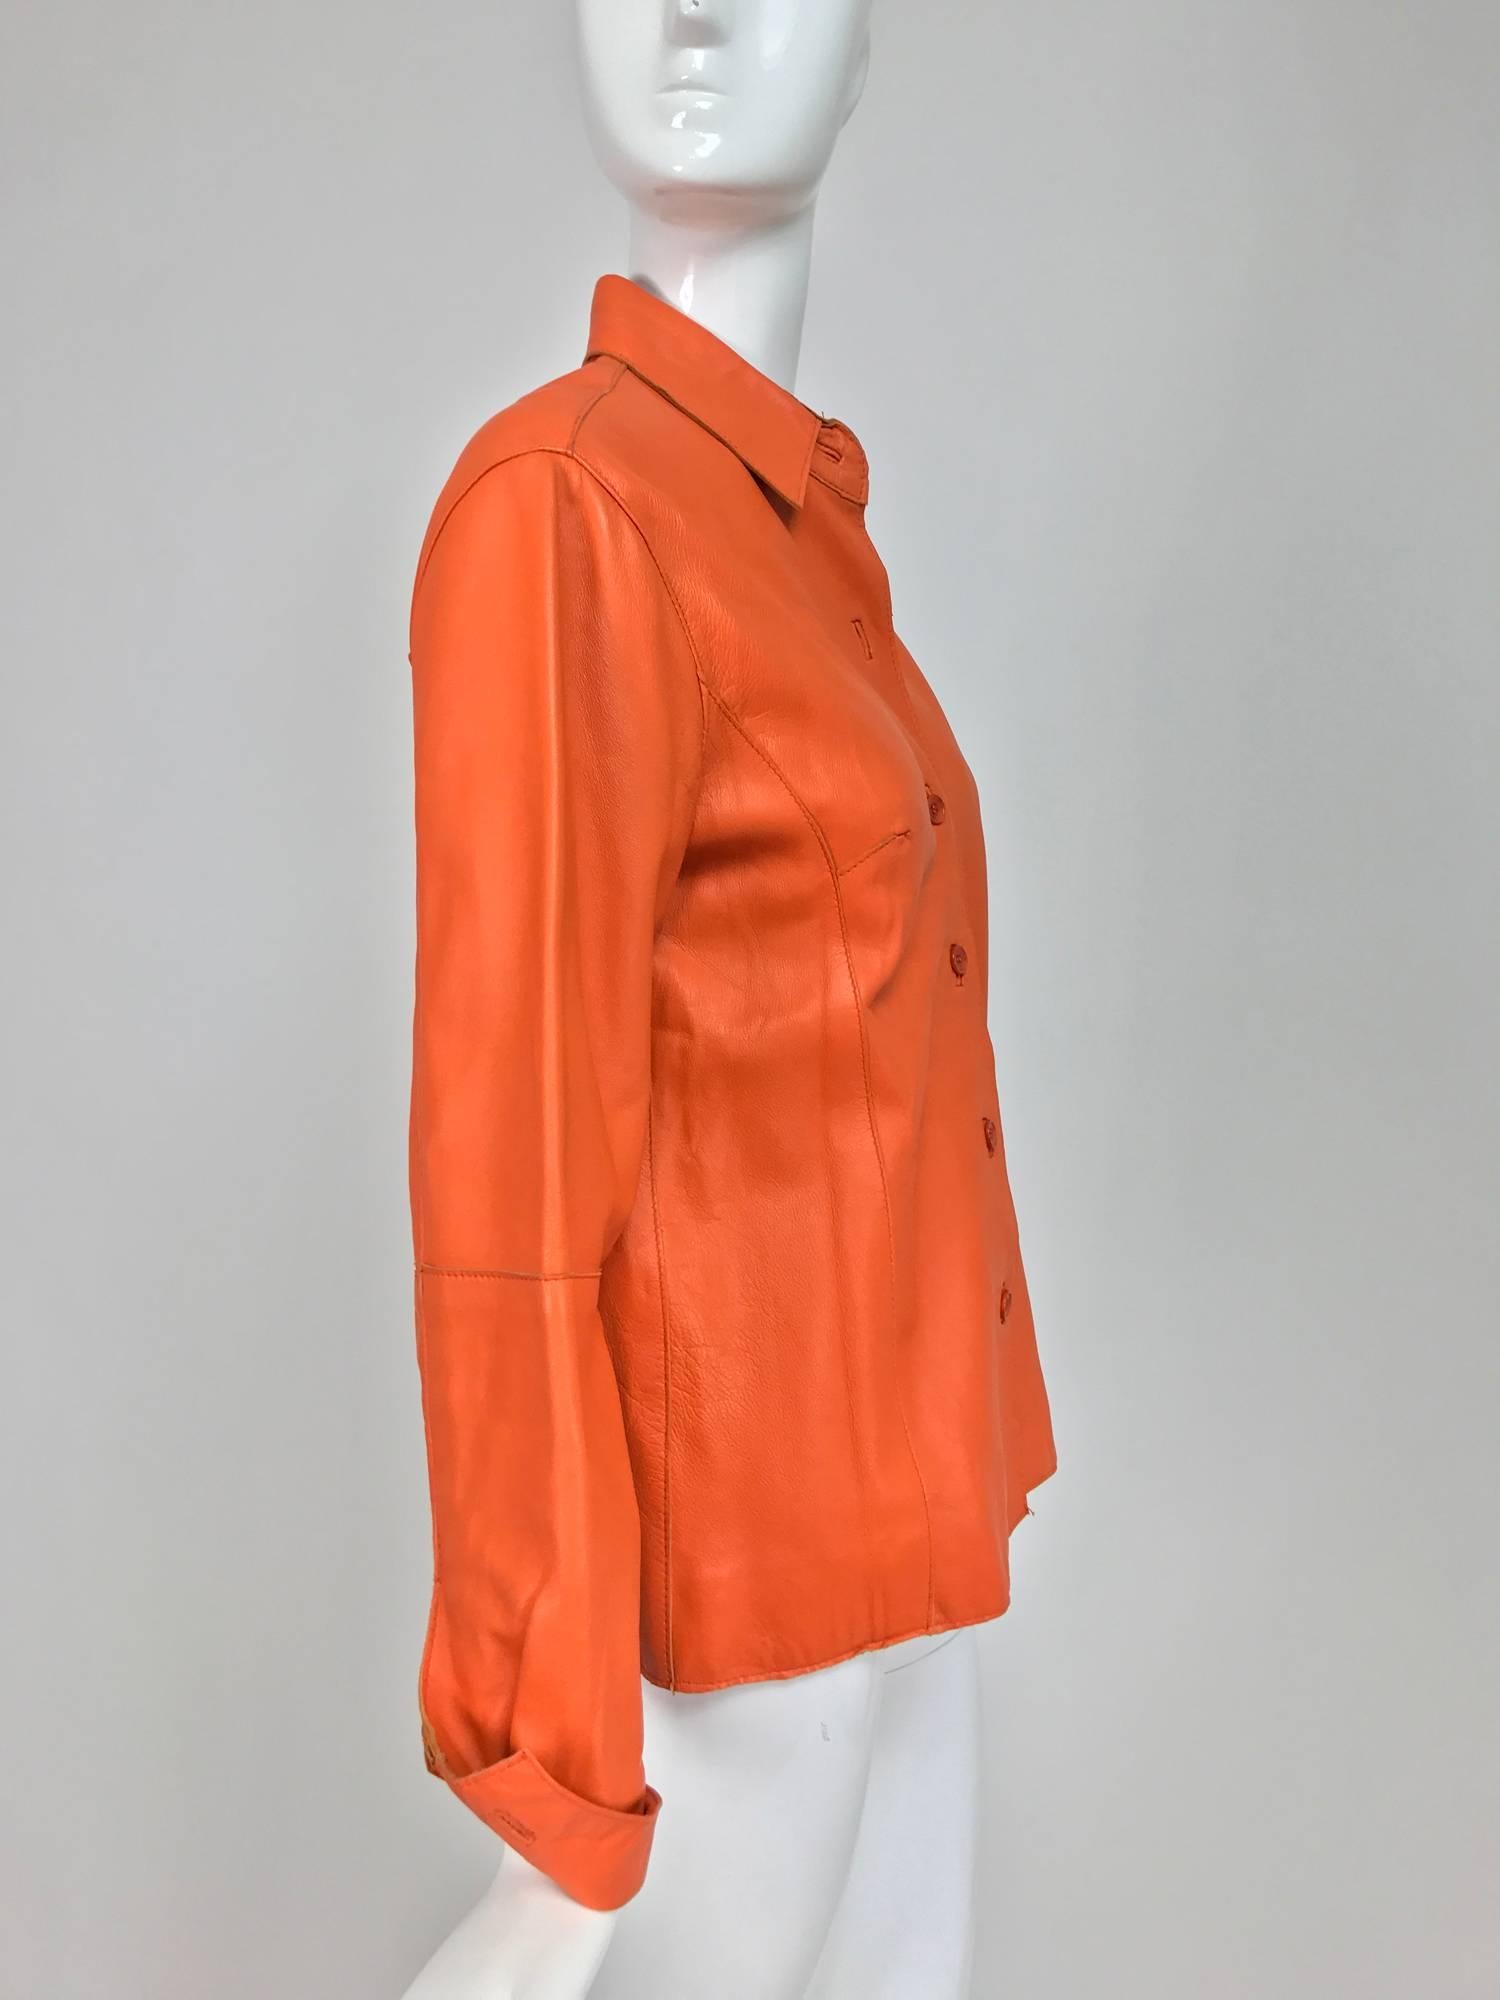 Vintage orange leather button front shirt jacket 1970s 3